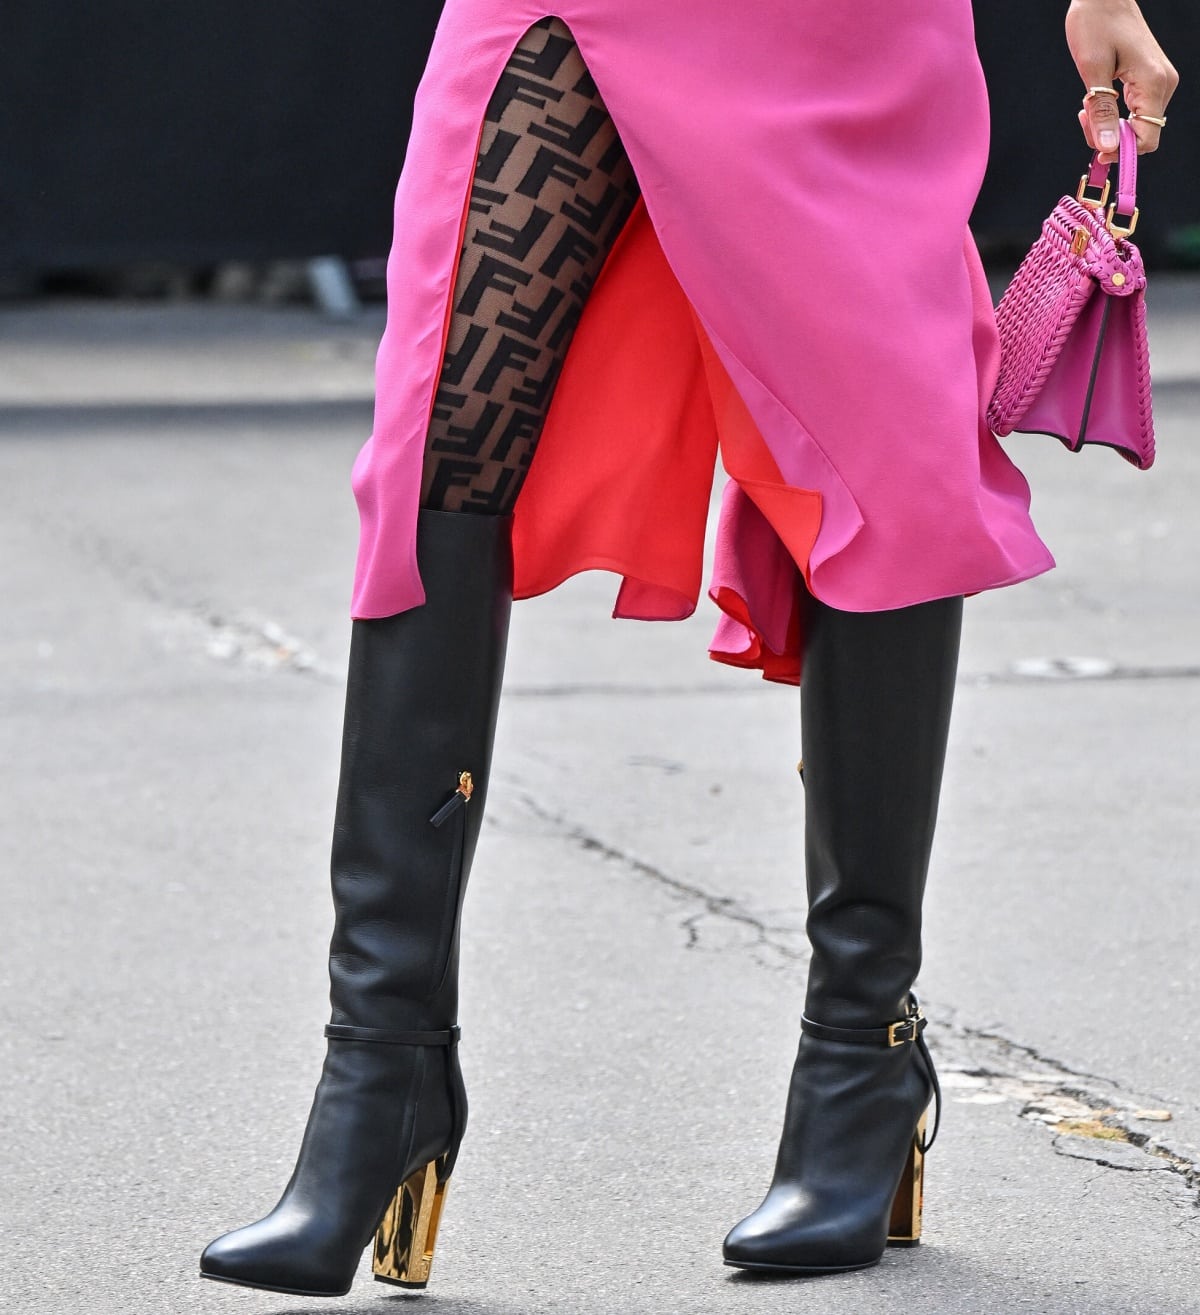 A closer look at Zoe Saldaña’s Fendi black knee-high boots styled with Fendi monogram stockings